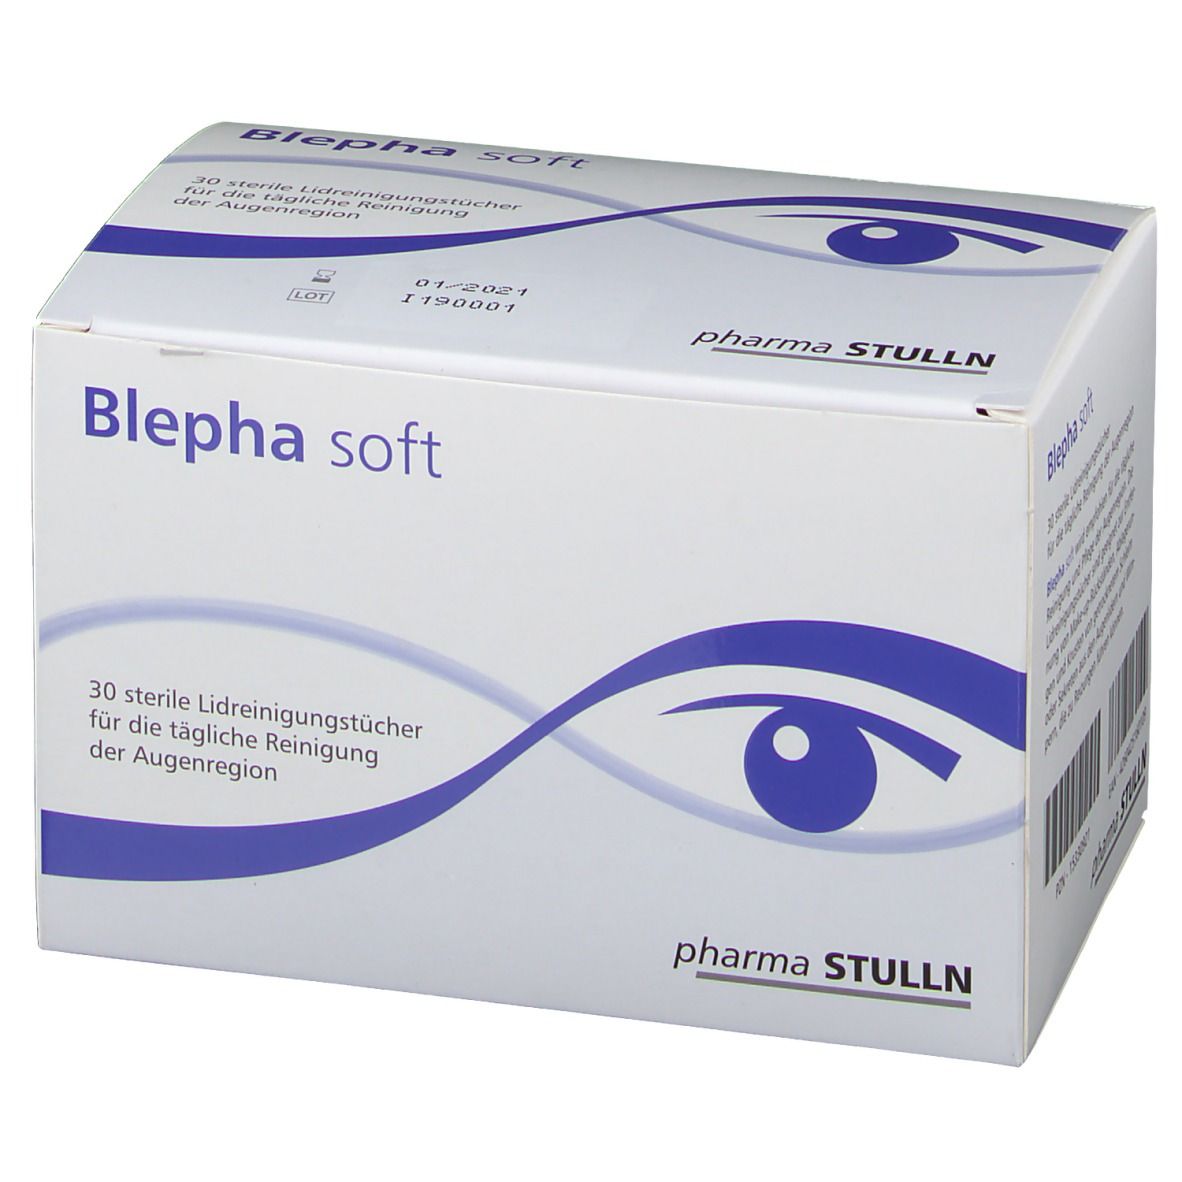 Blepha soft